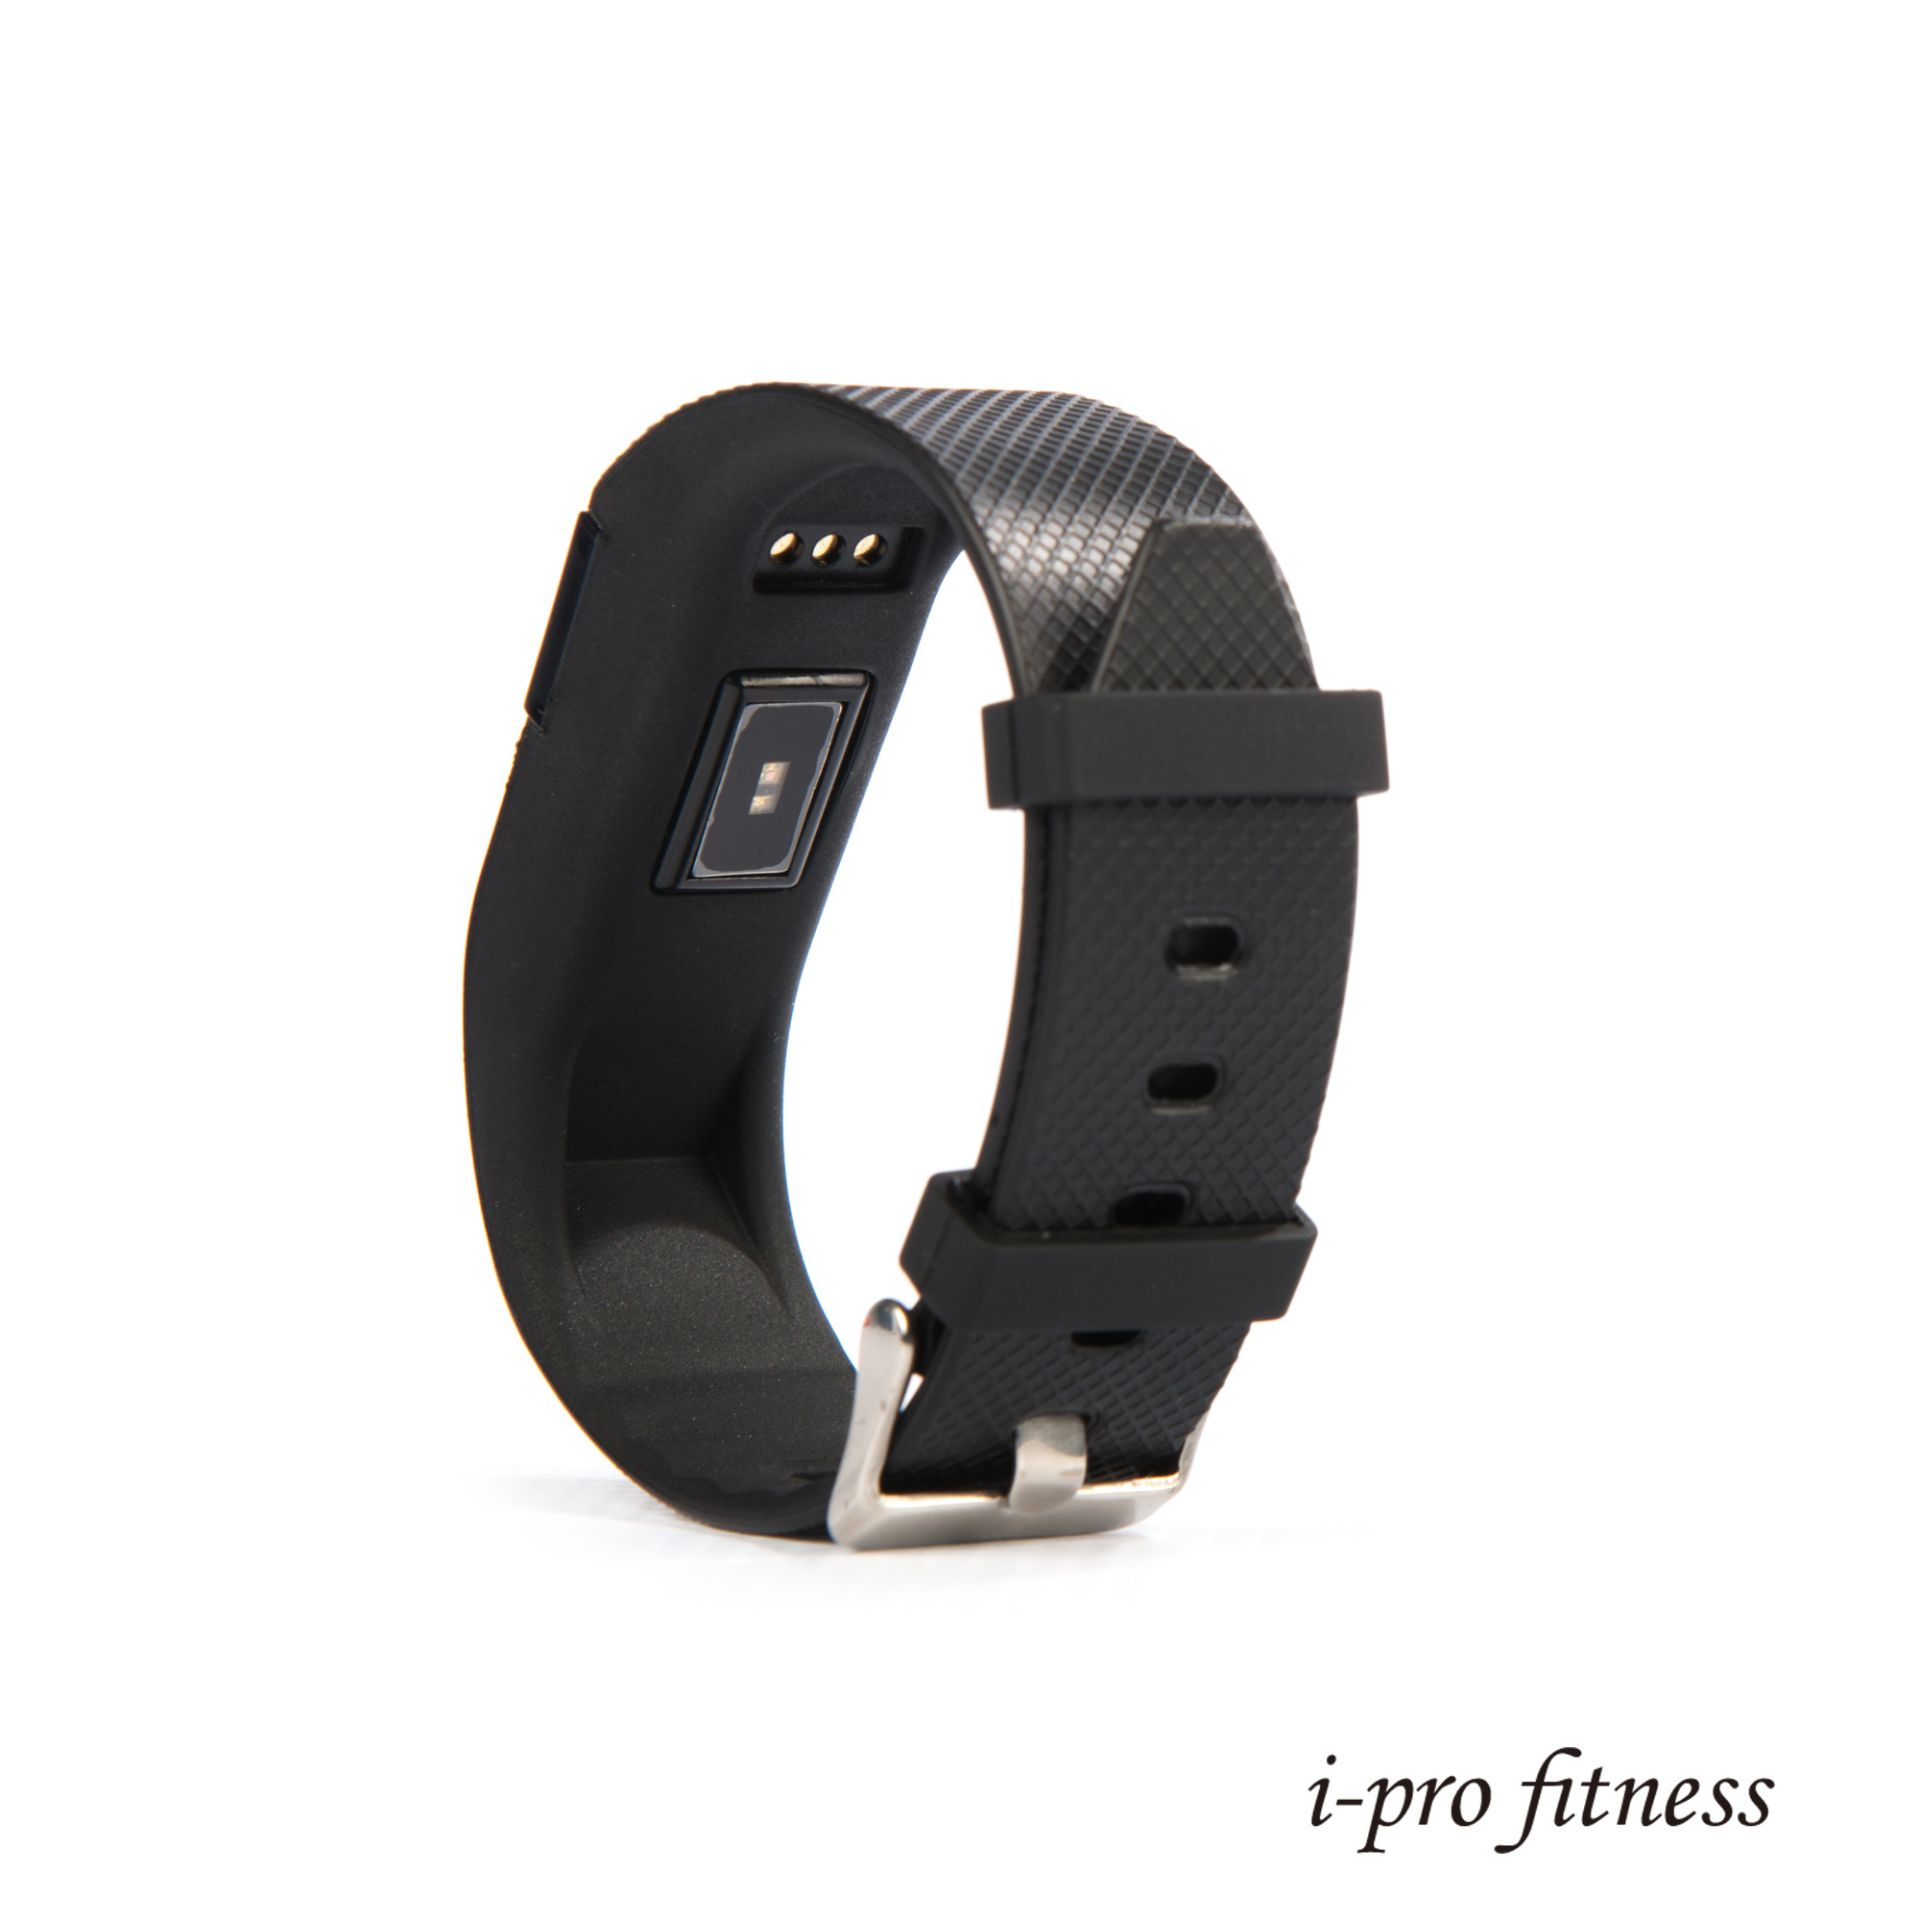 10x Fitness Tracker i-pro fitness, Bluetooth 4.0 Sports Smart Bracelet, Heart Rate Monitor - Image 8 of 8